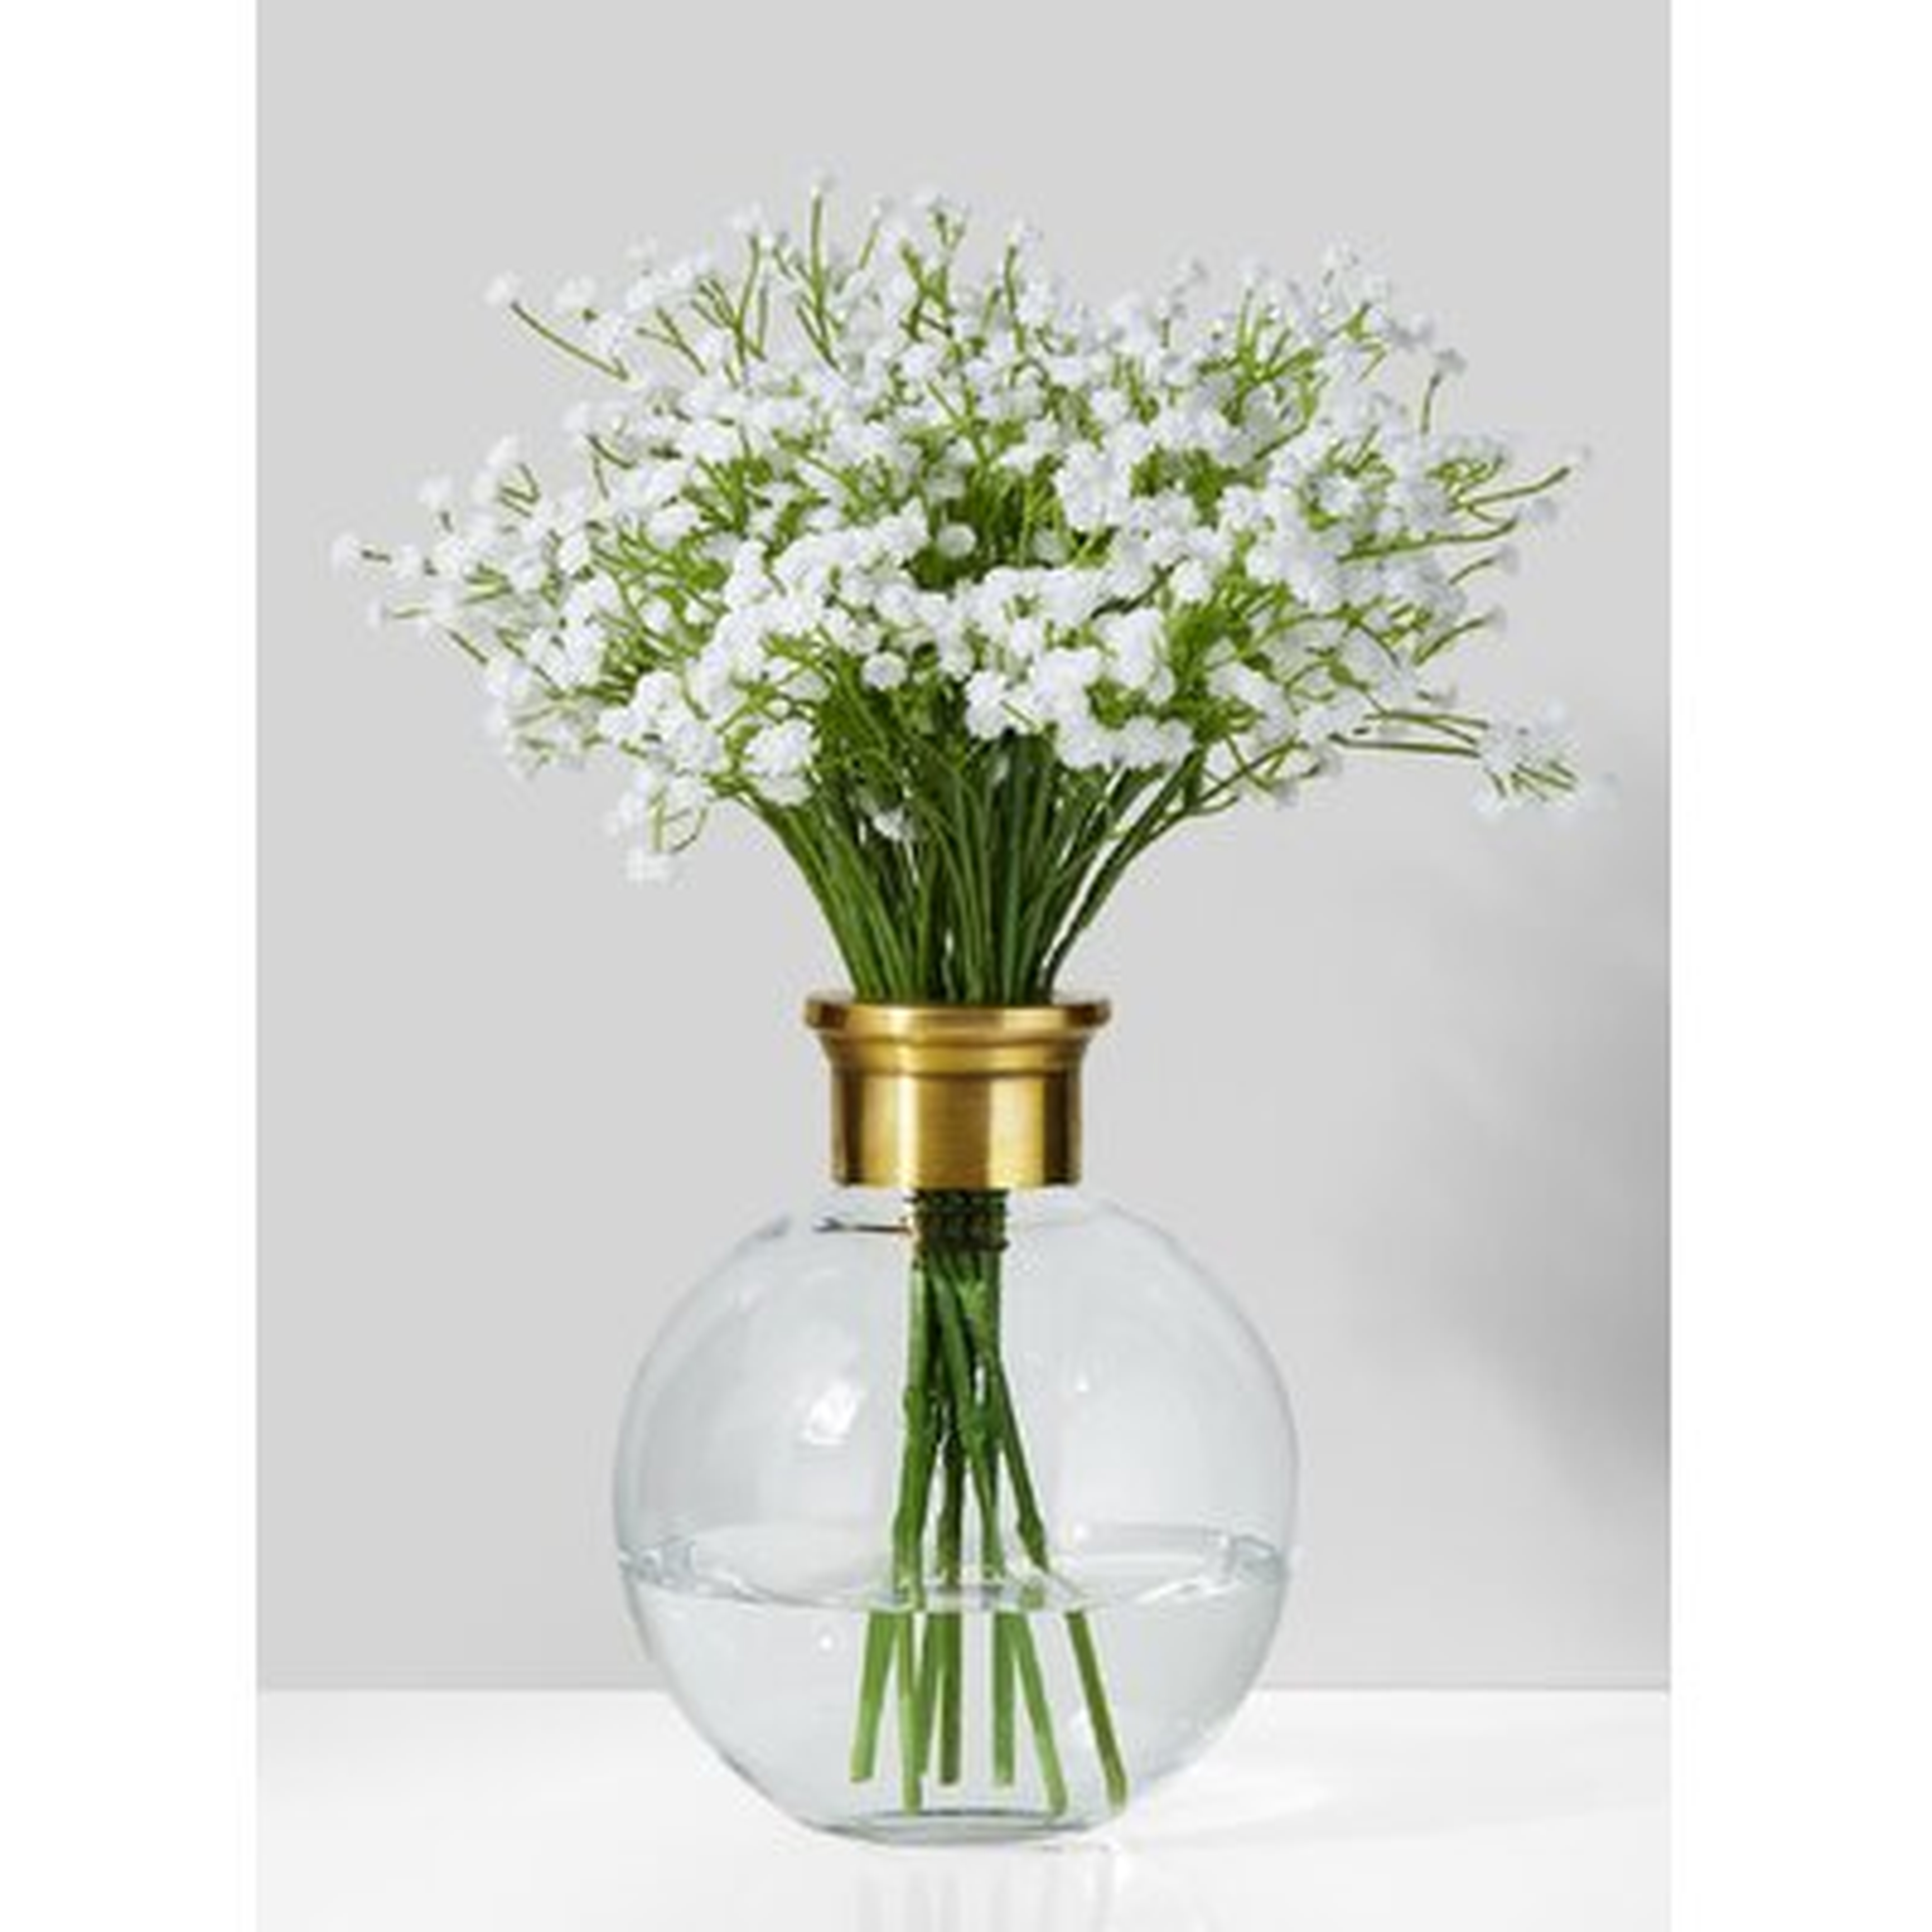 Serene Spaces Living Ball Vase With Gold Rim, Elegant Flower Vase, Measures 7" Tall And 5" Diameter - Wayfair